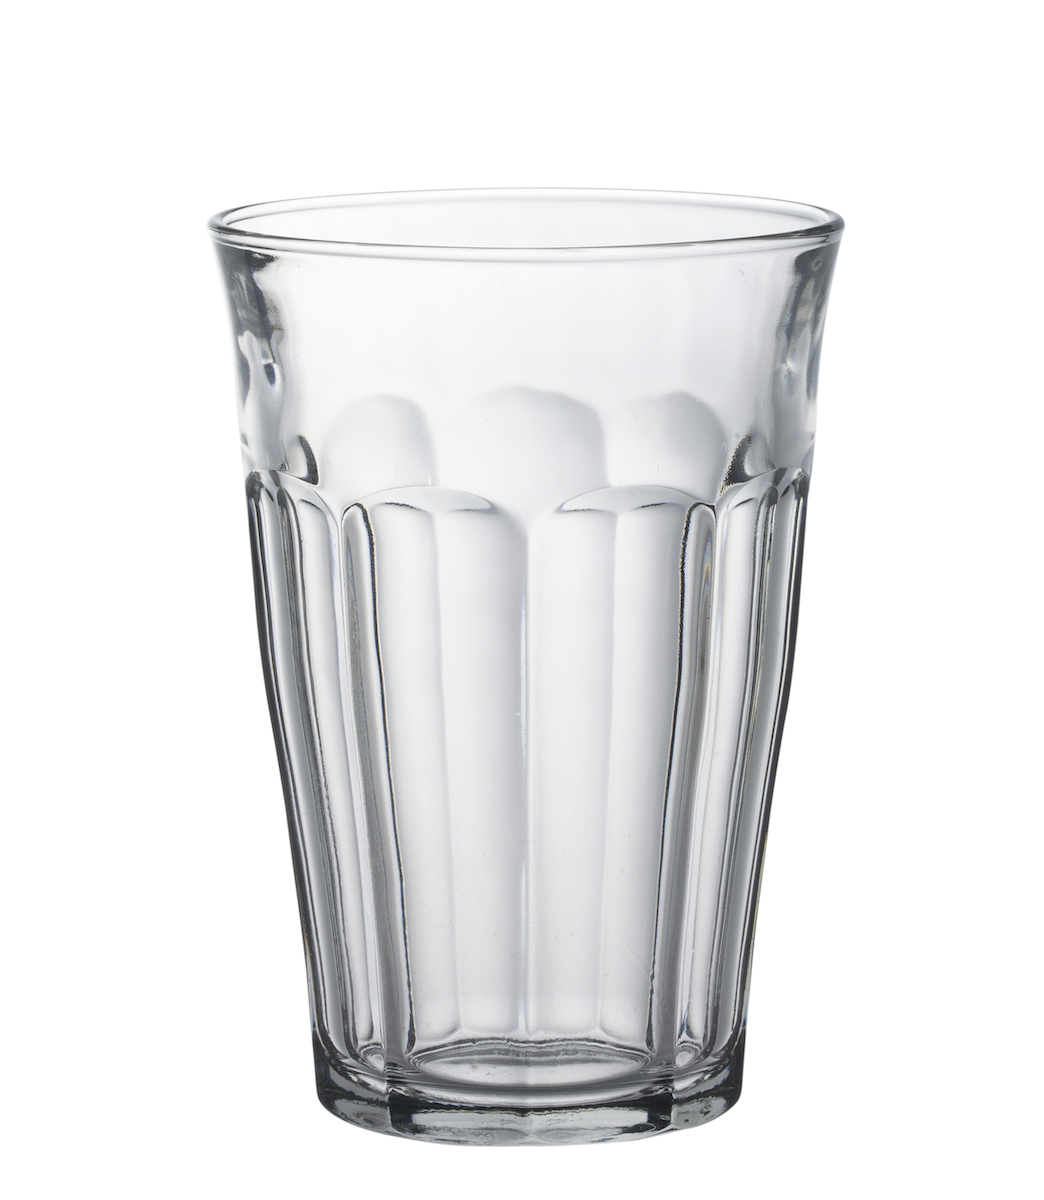 DURALEX デュラレックス ピカルディー クリア 購買 フランス グラス 透明 セール 割引食器 SALE 360ml 30%off お気に入り 30%OFF